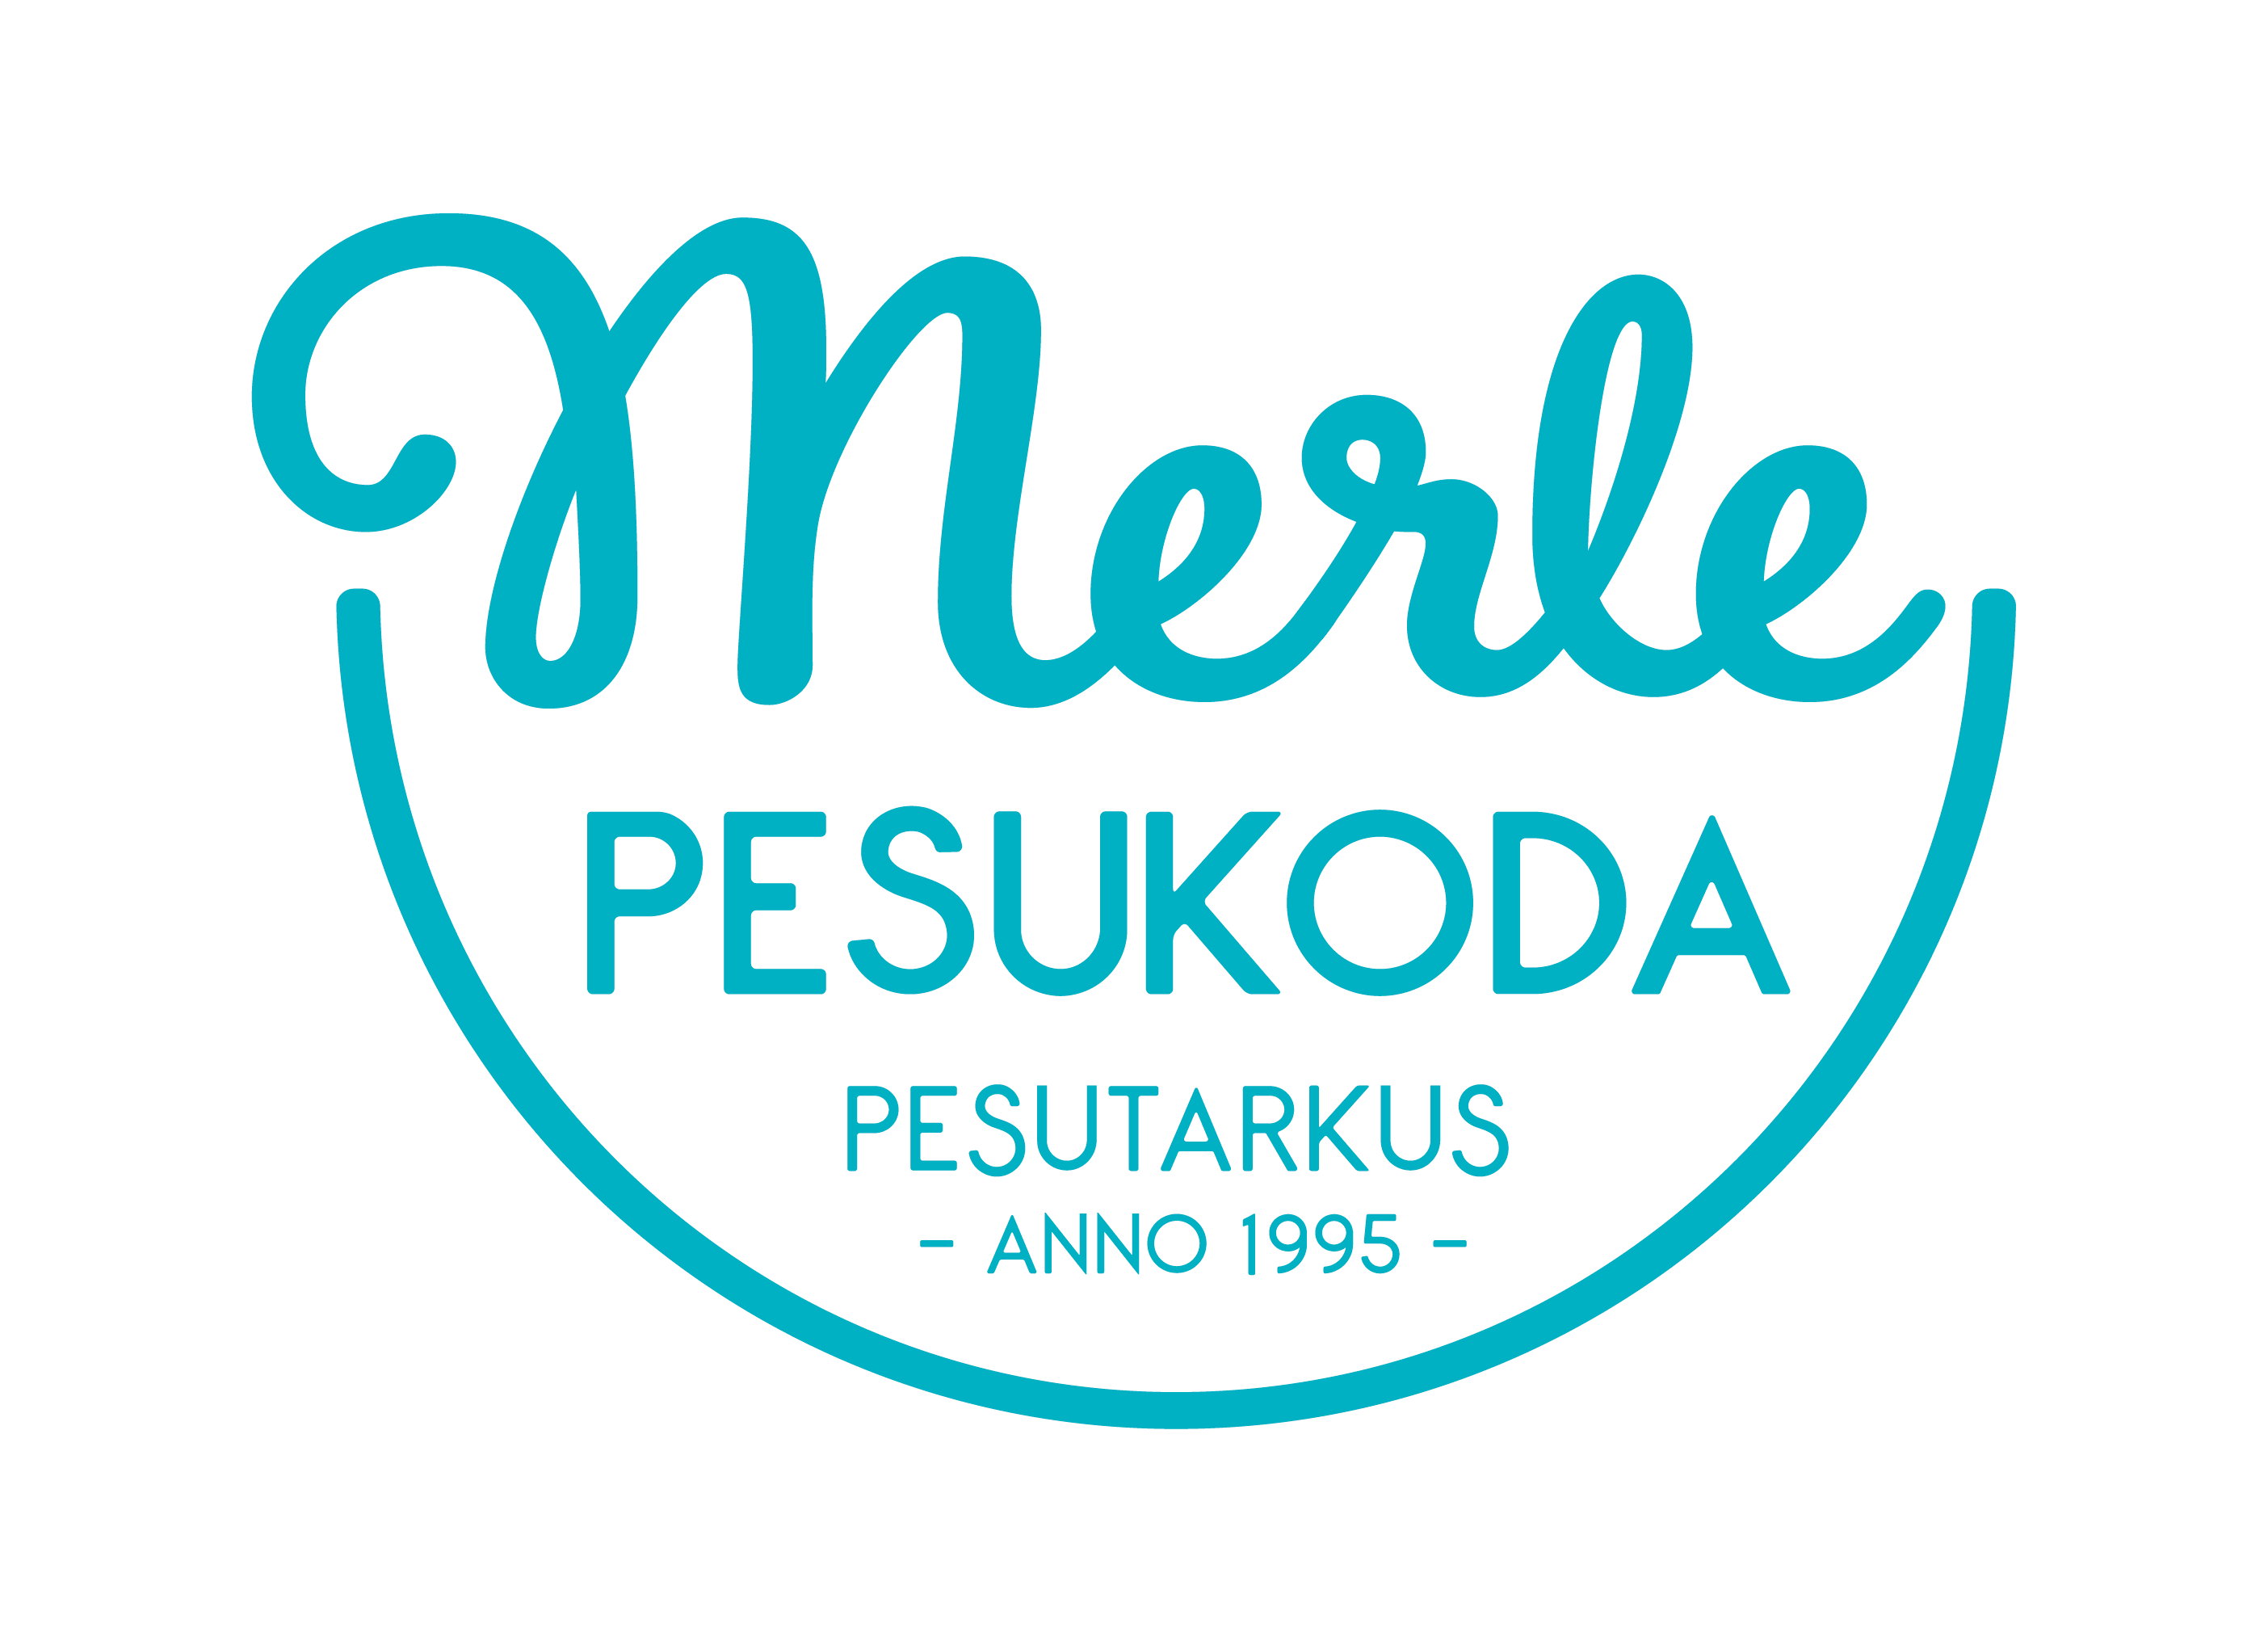 Merle Pesukoda